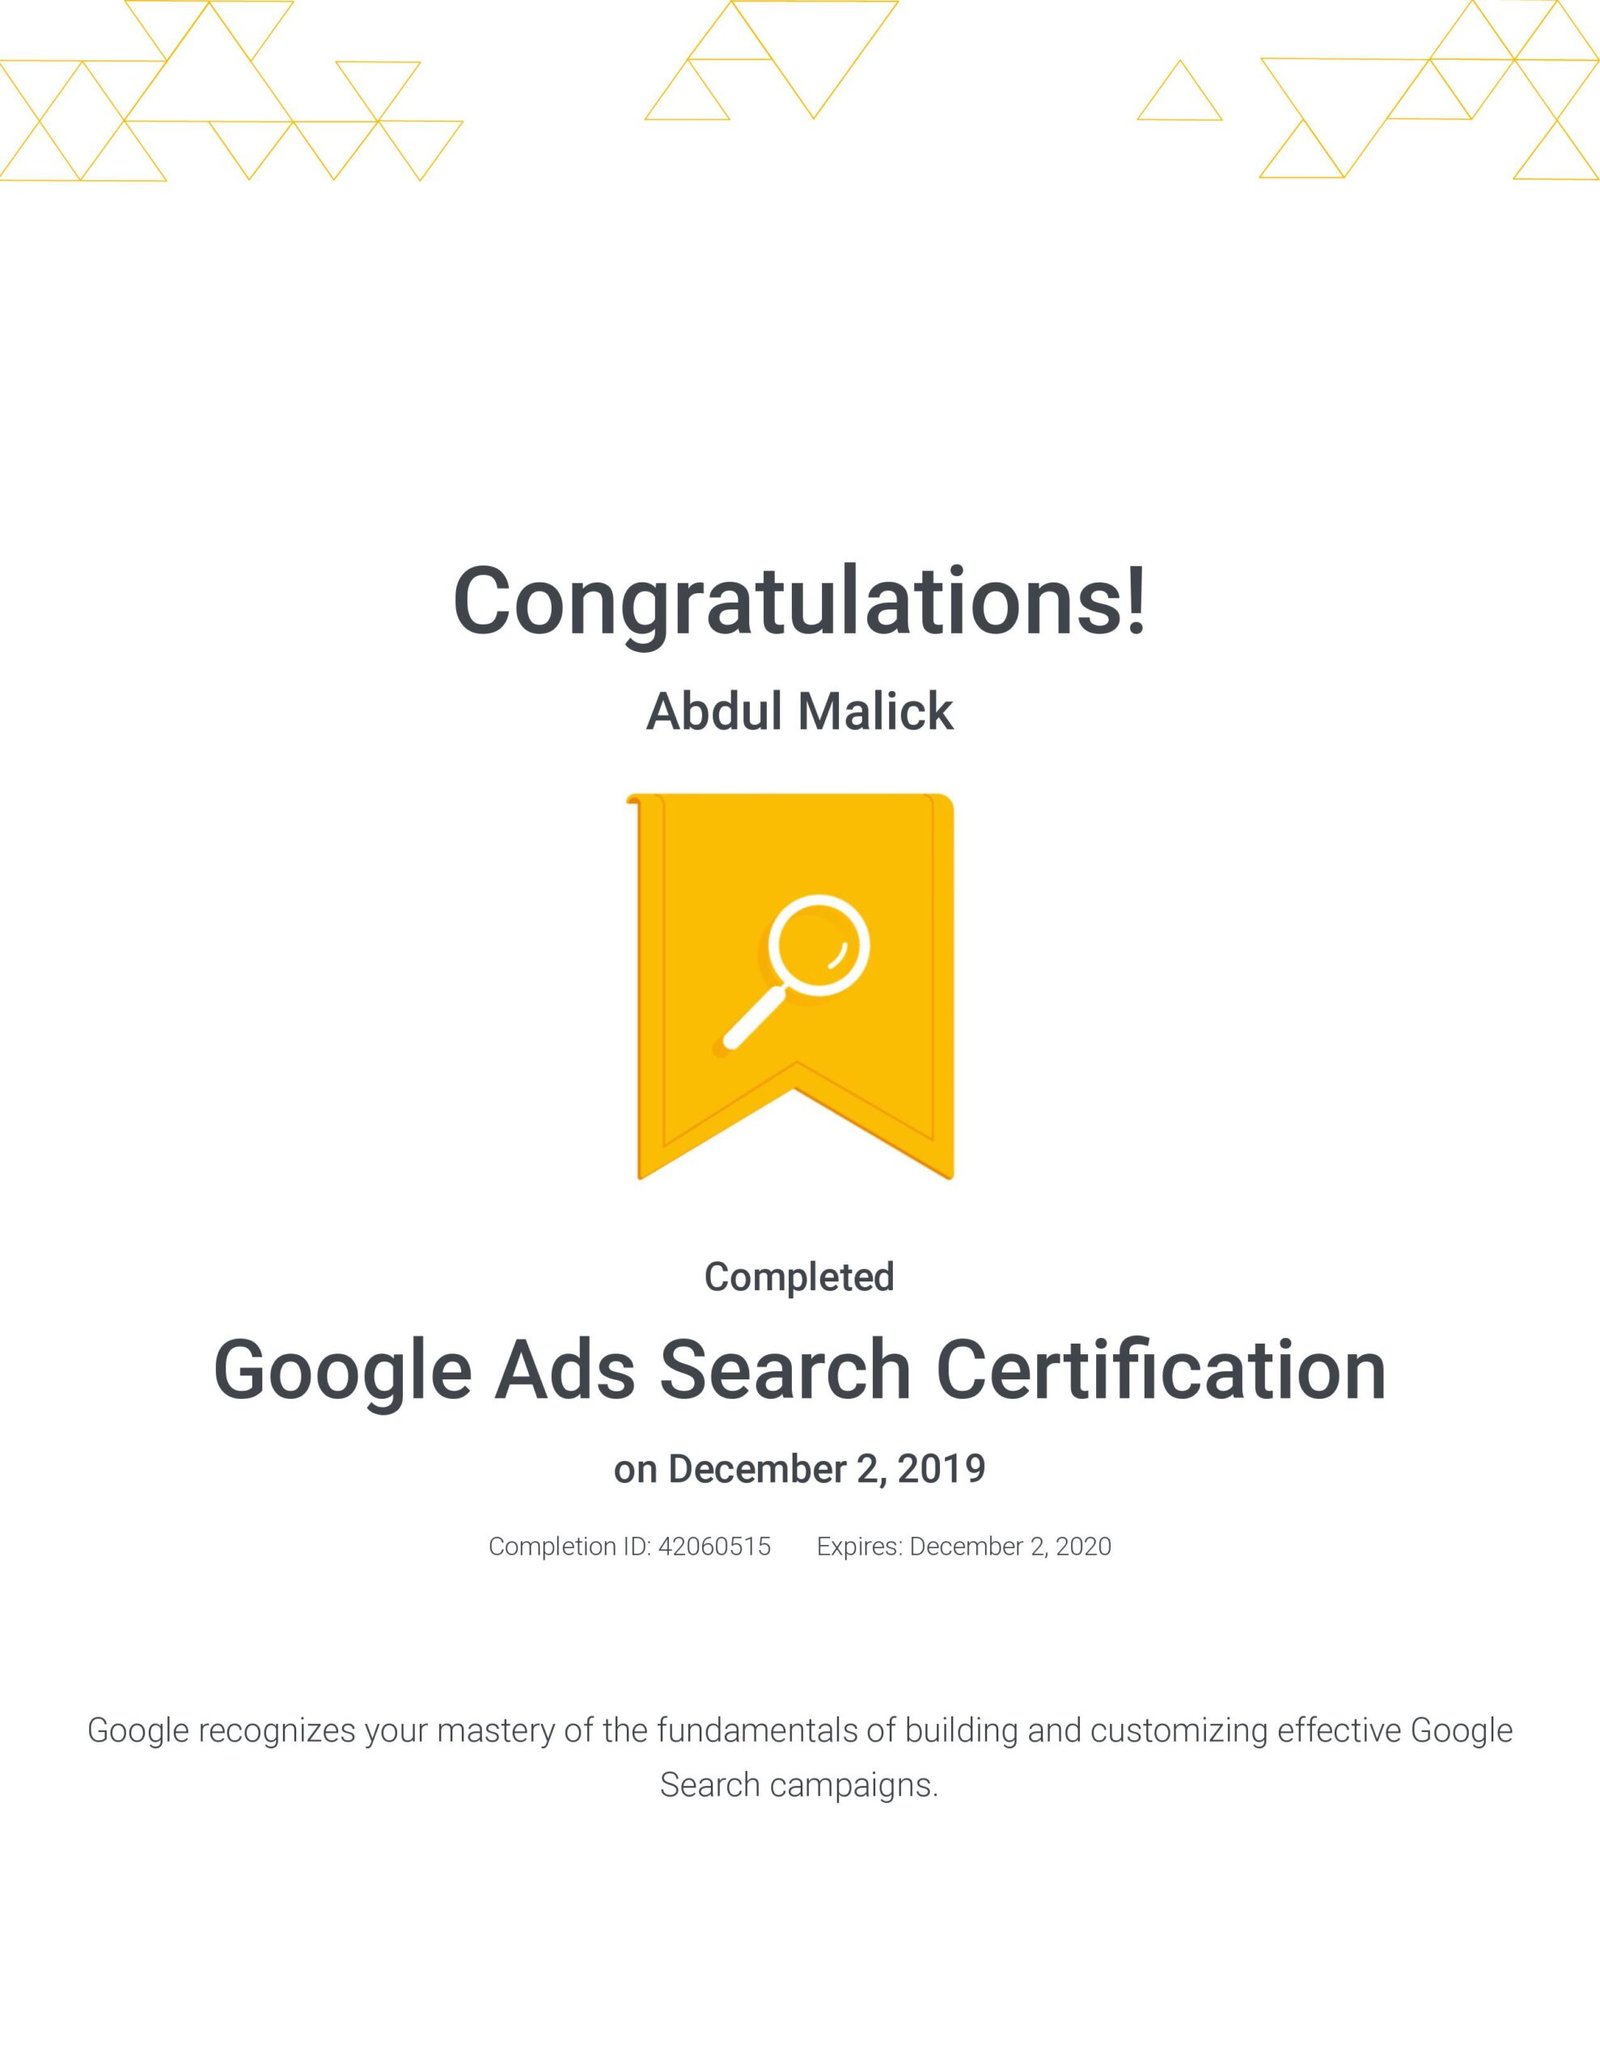 Google Ads Certification - Abdul Malick